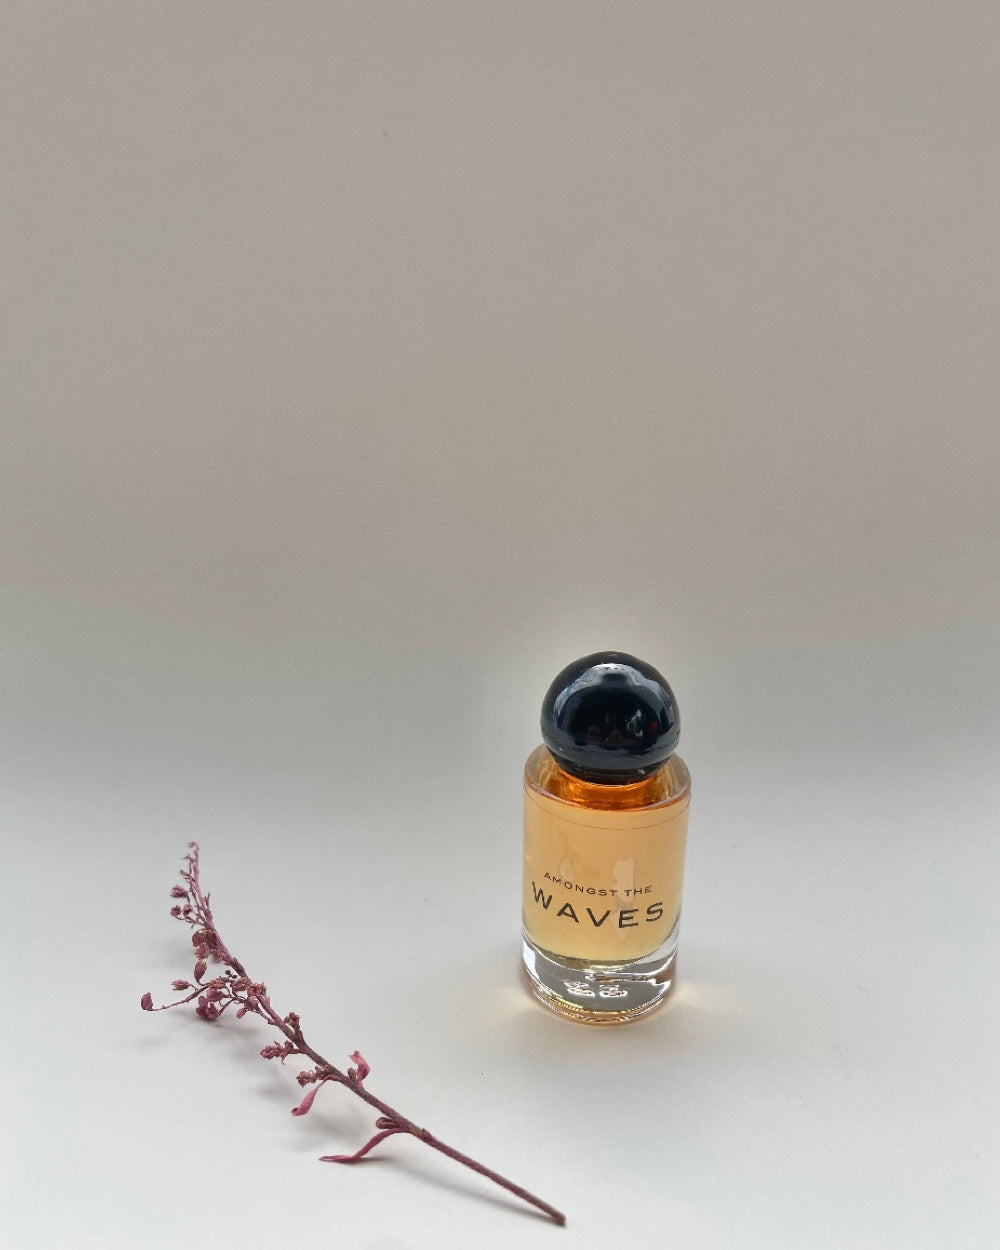 Olivine Atelier Amongst The Waves Perfume Oil in glass bottle against neutral background